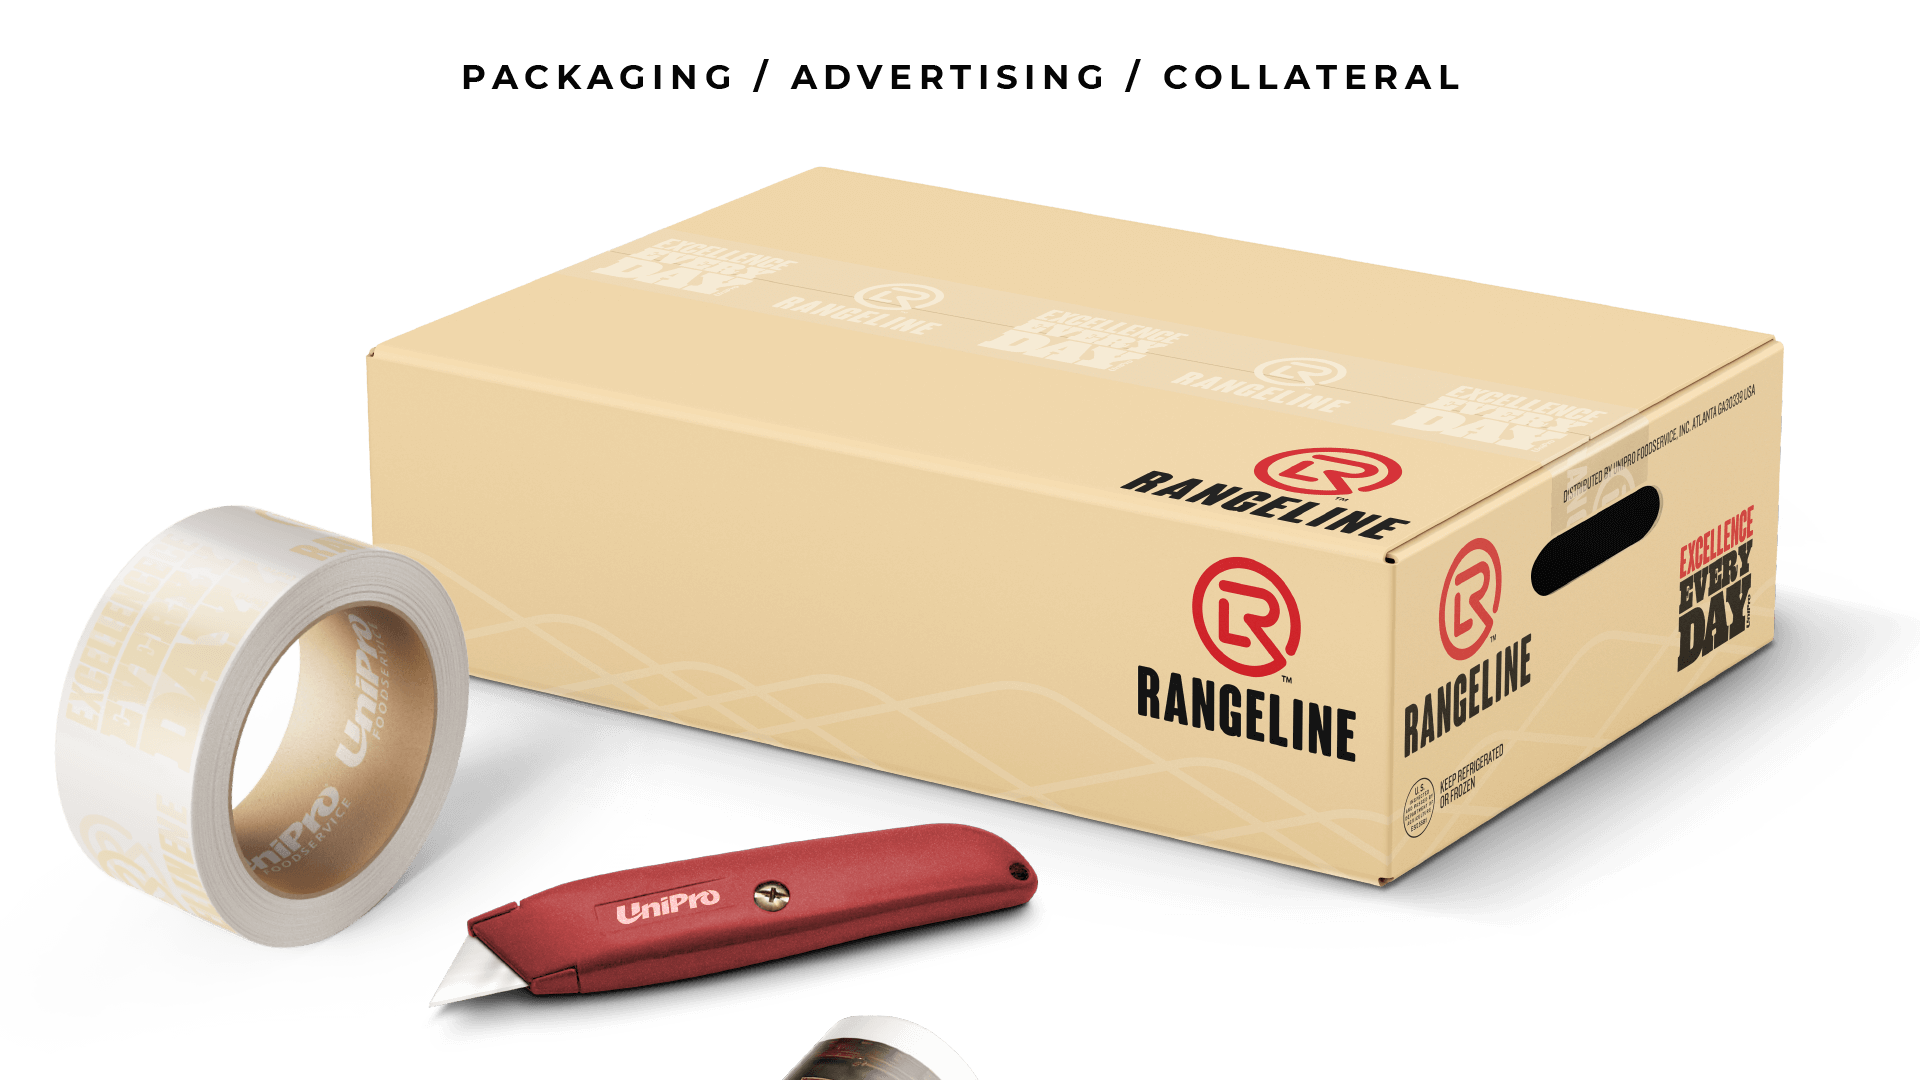 Rangeline Box, Packing Tape & Utility Knife